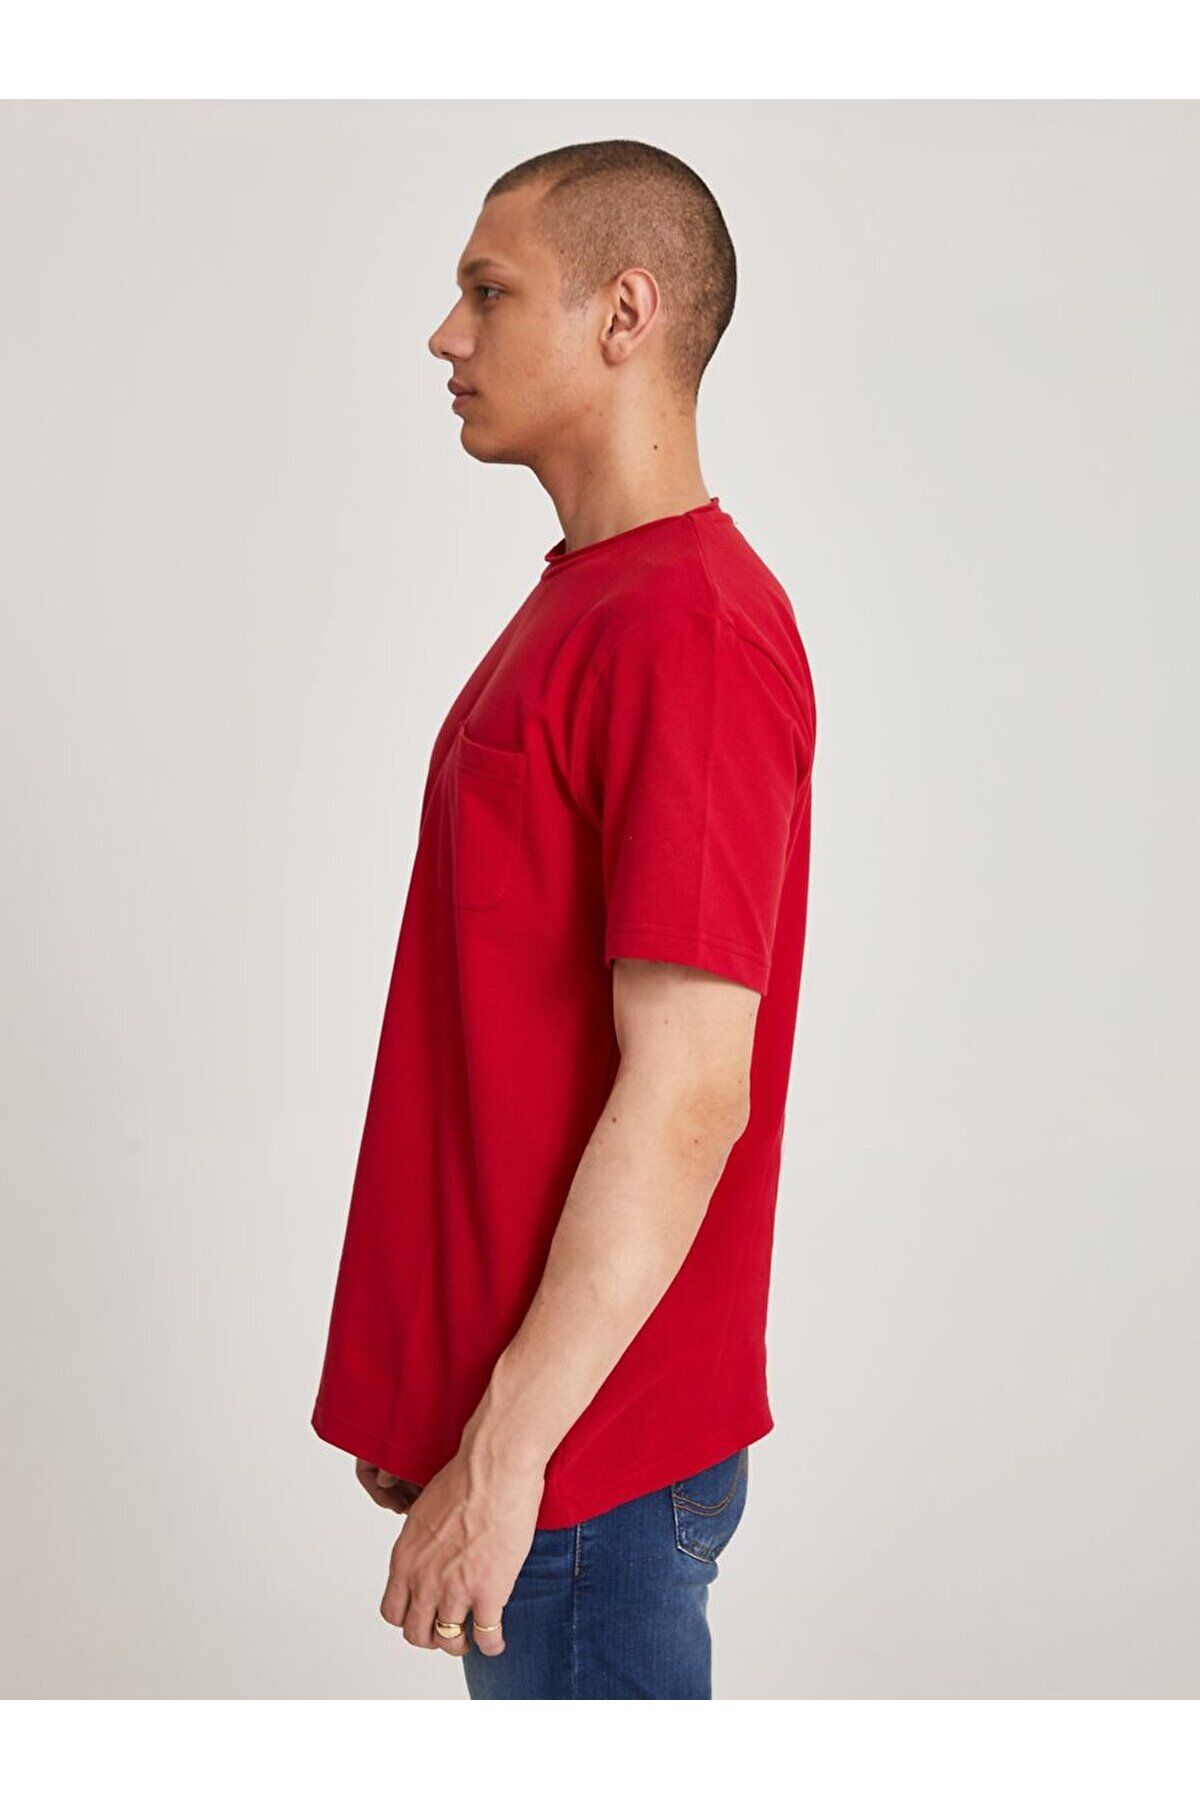 Ltb تی شرت قرمز جیب دار